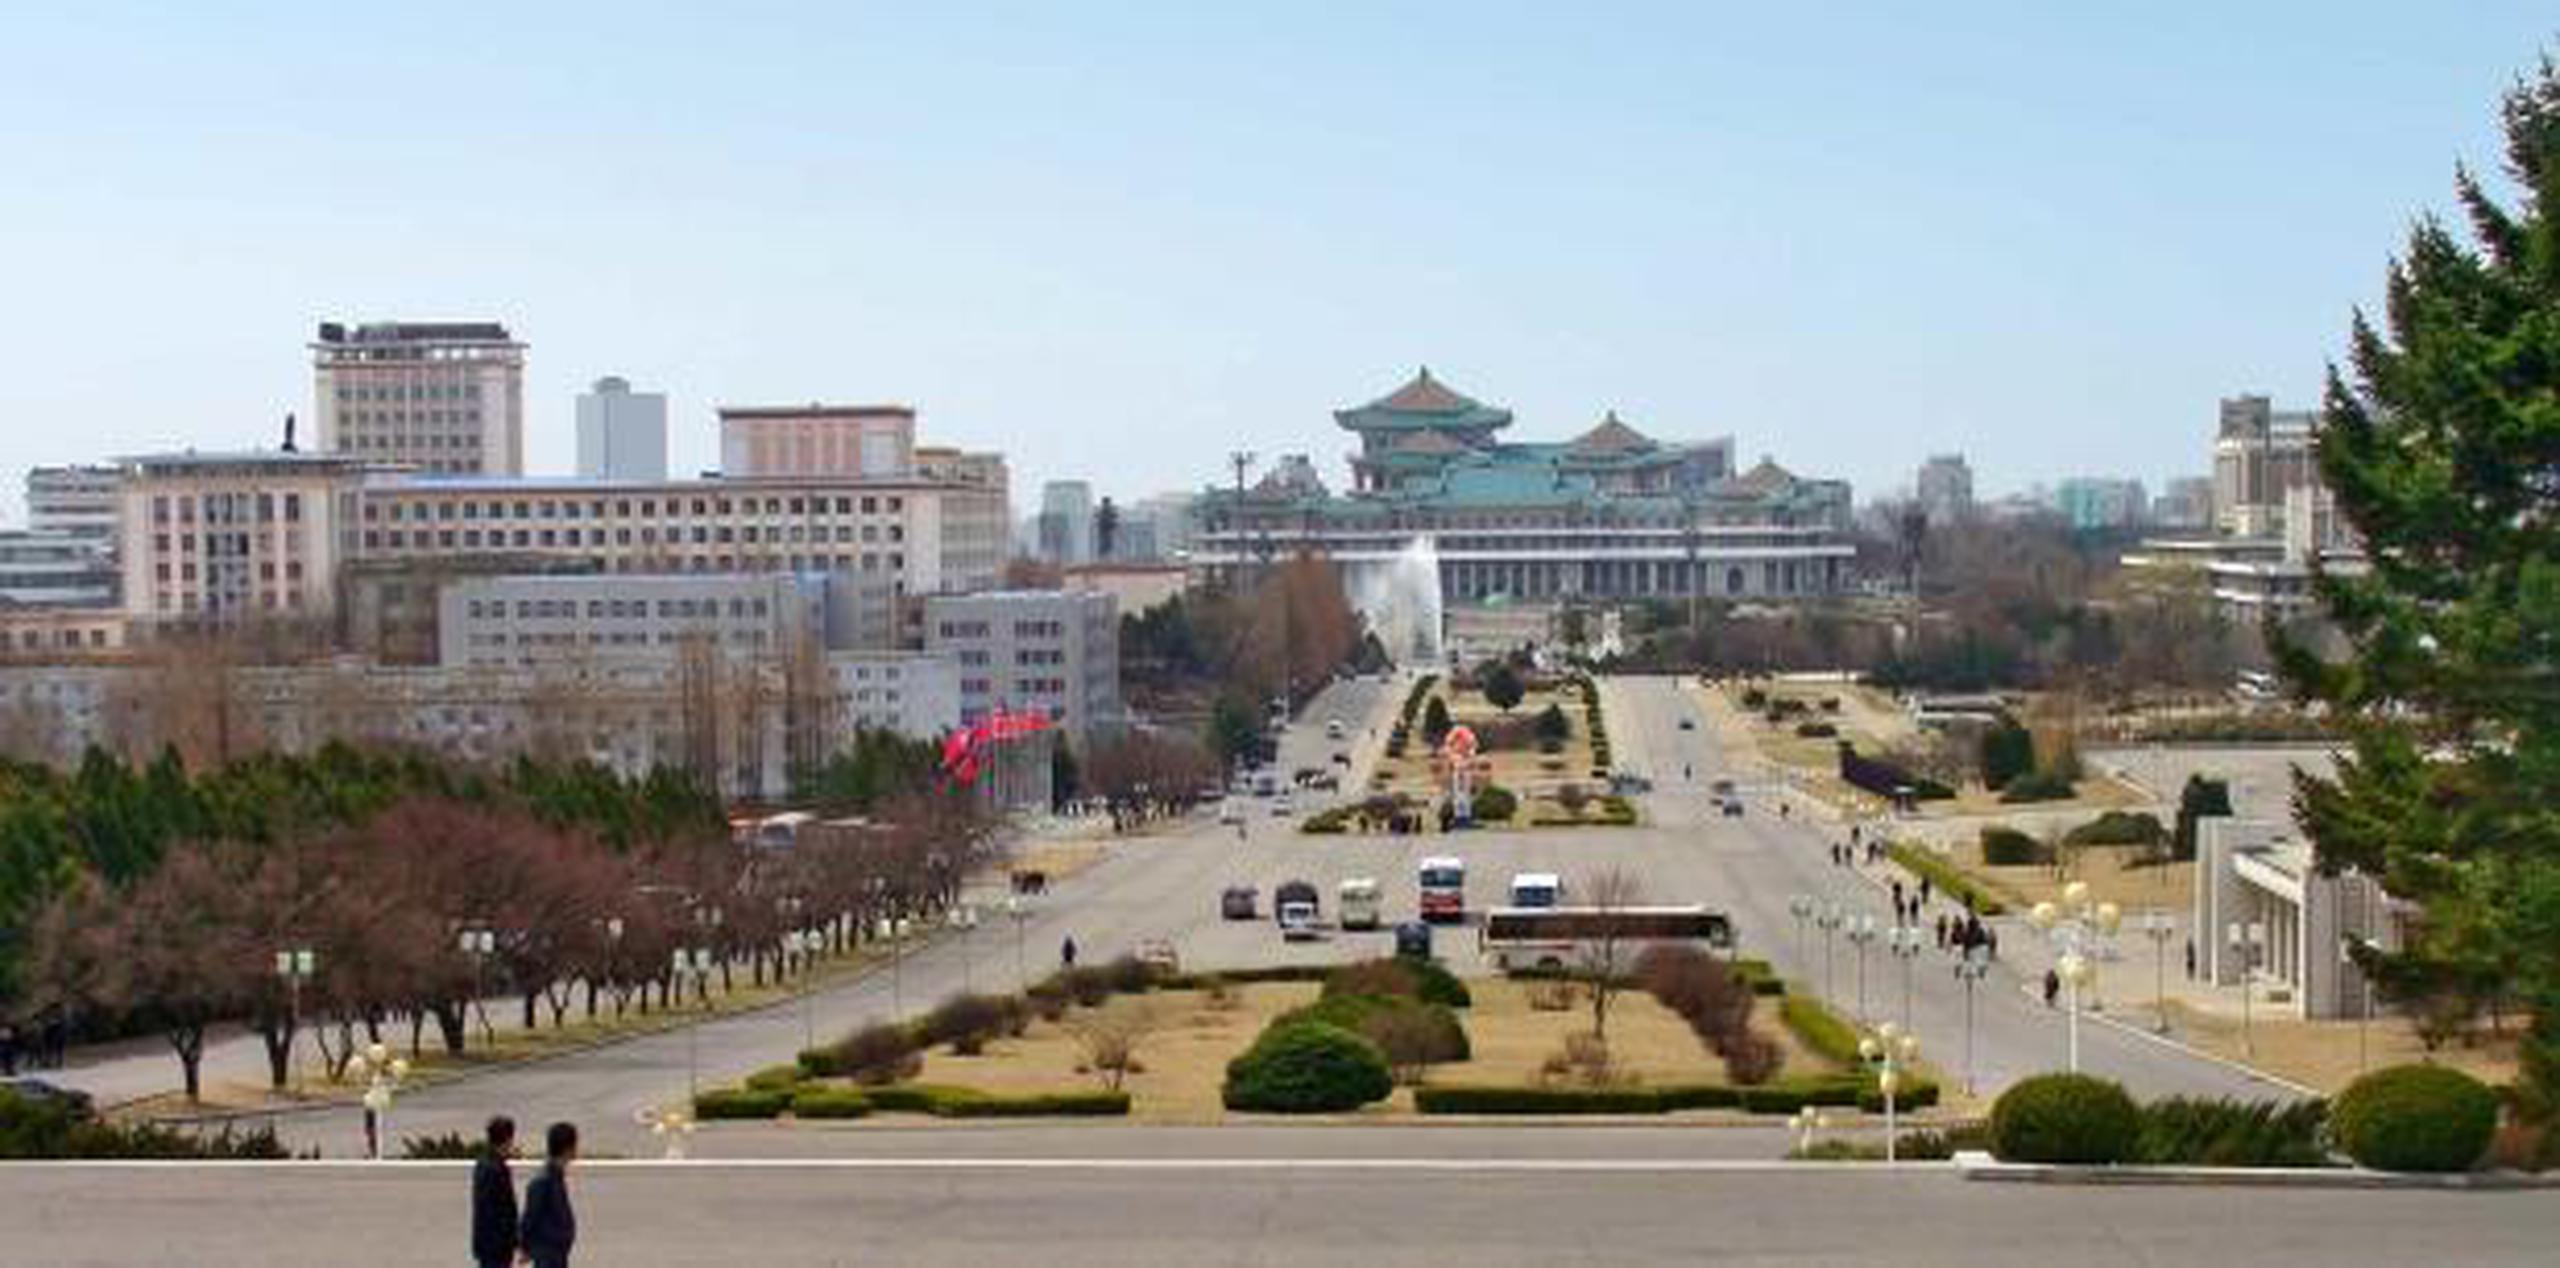 Vista de Pyongyang, capital de Corea del Norte. (Shutterstock)